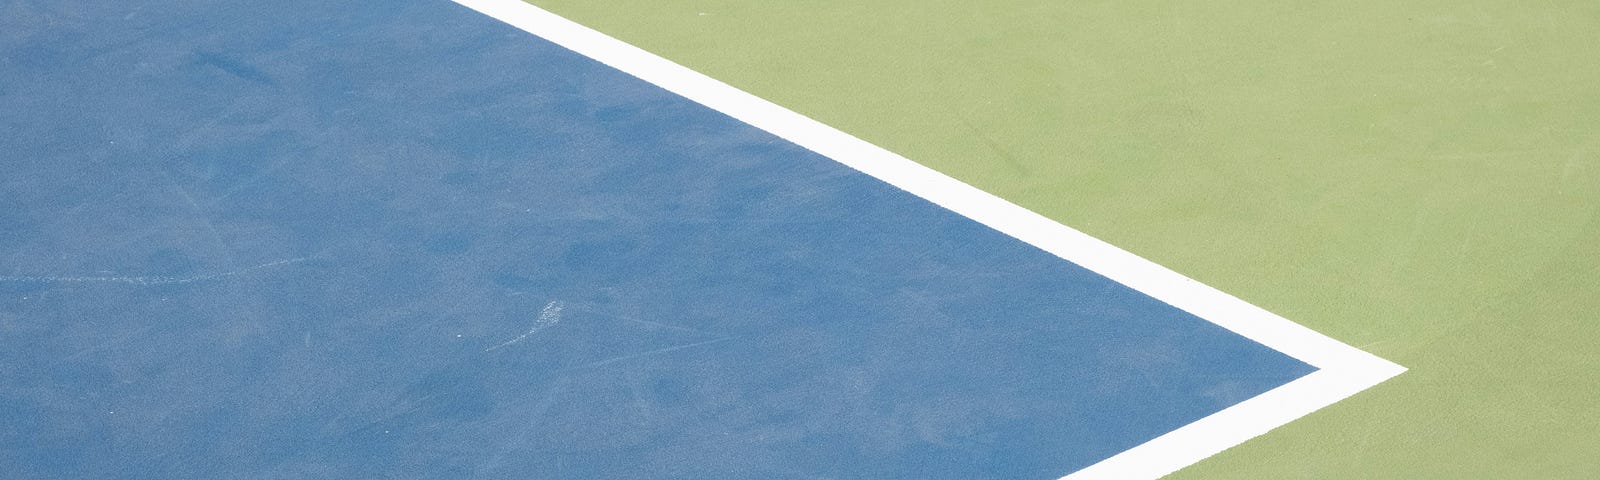 Close up detail of a tennis court.